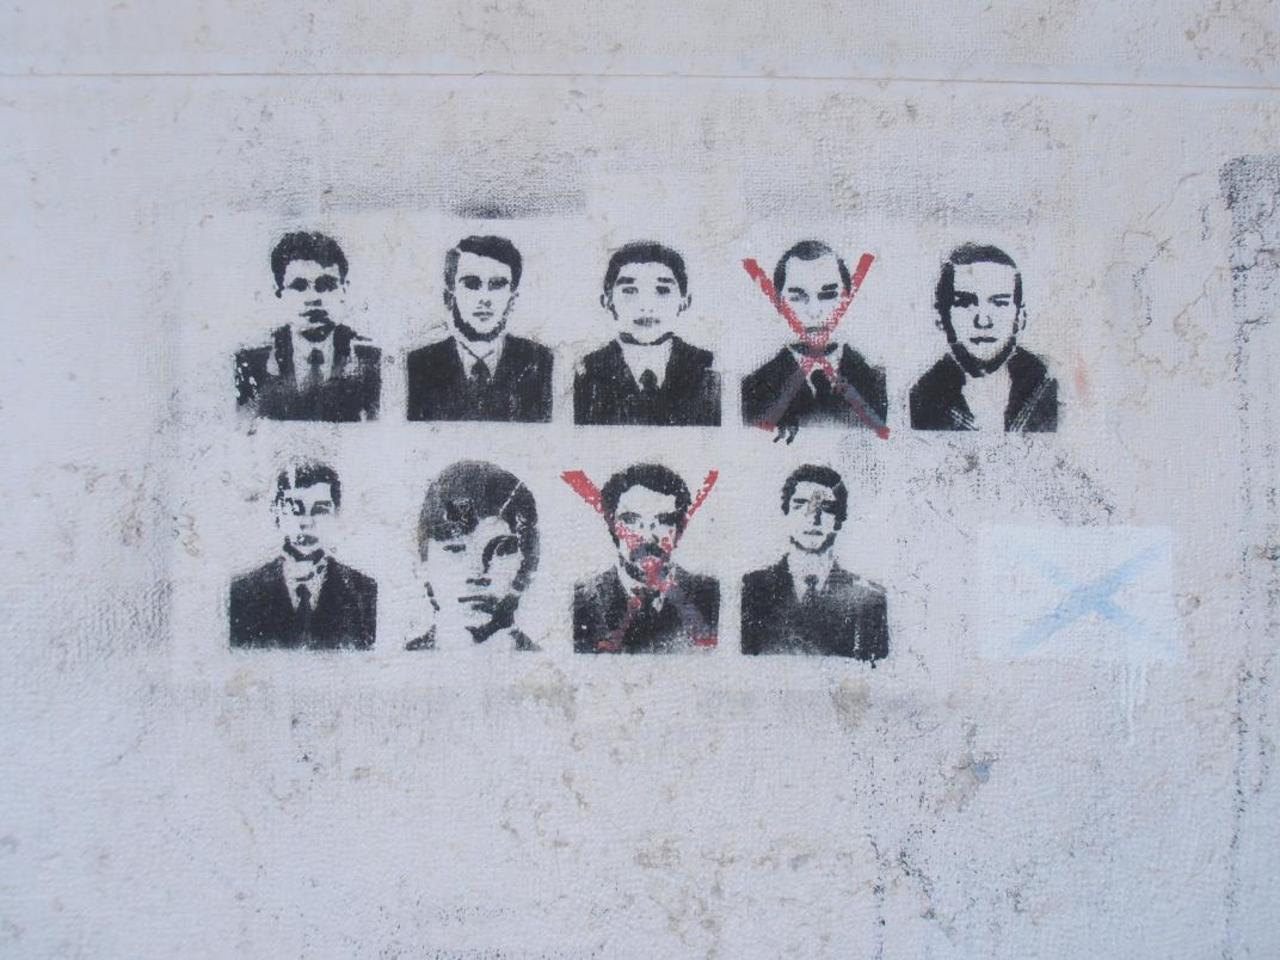 #graffiti #streetart #veniceitaly https://t.co/4RnegxOmli